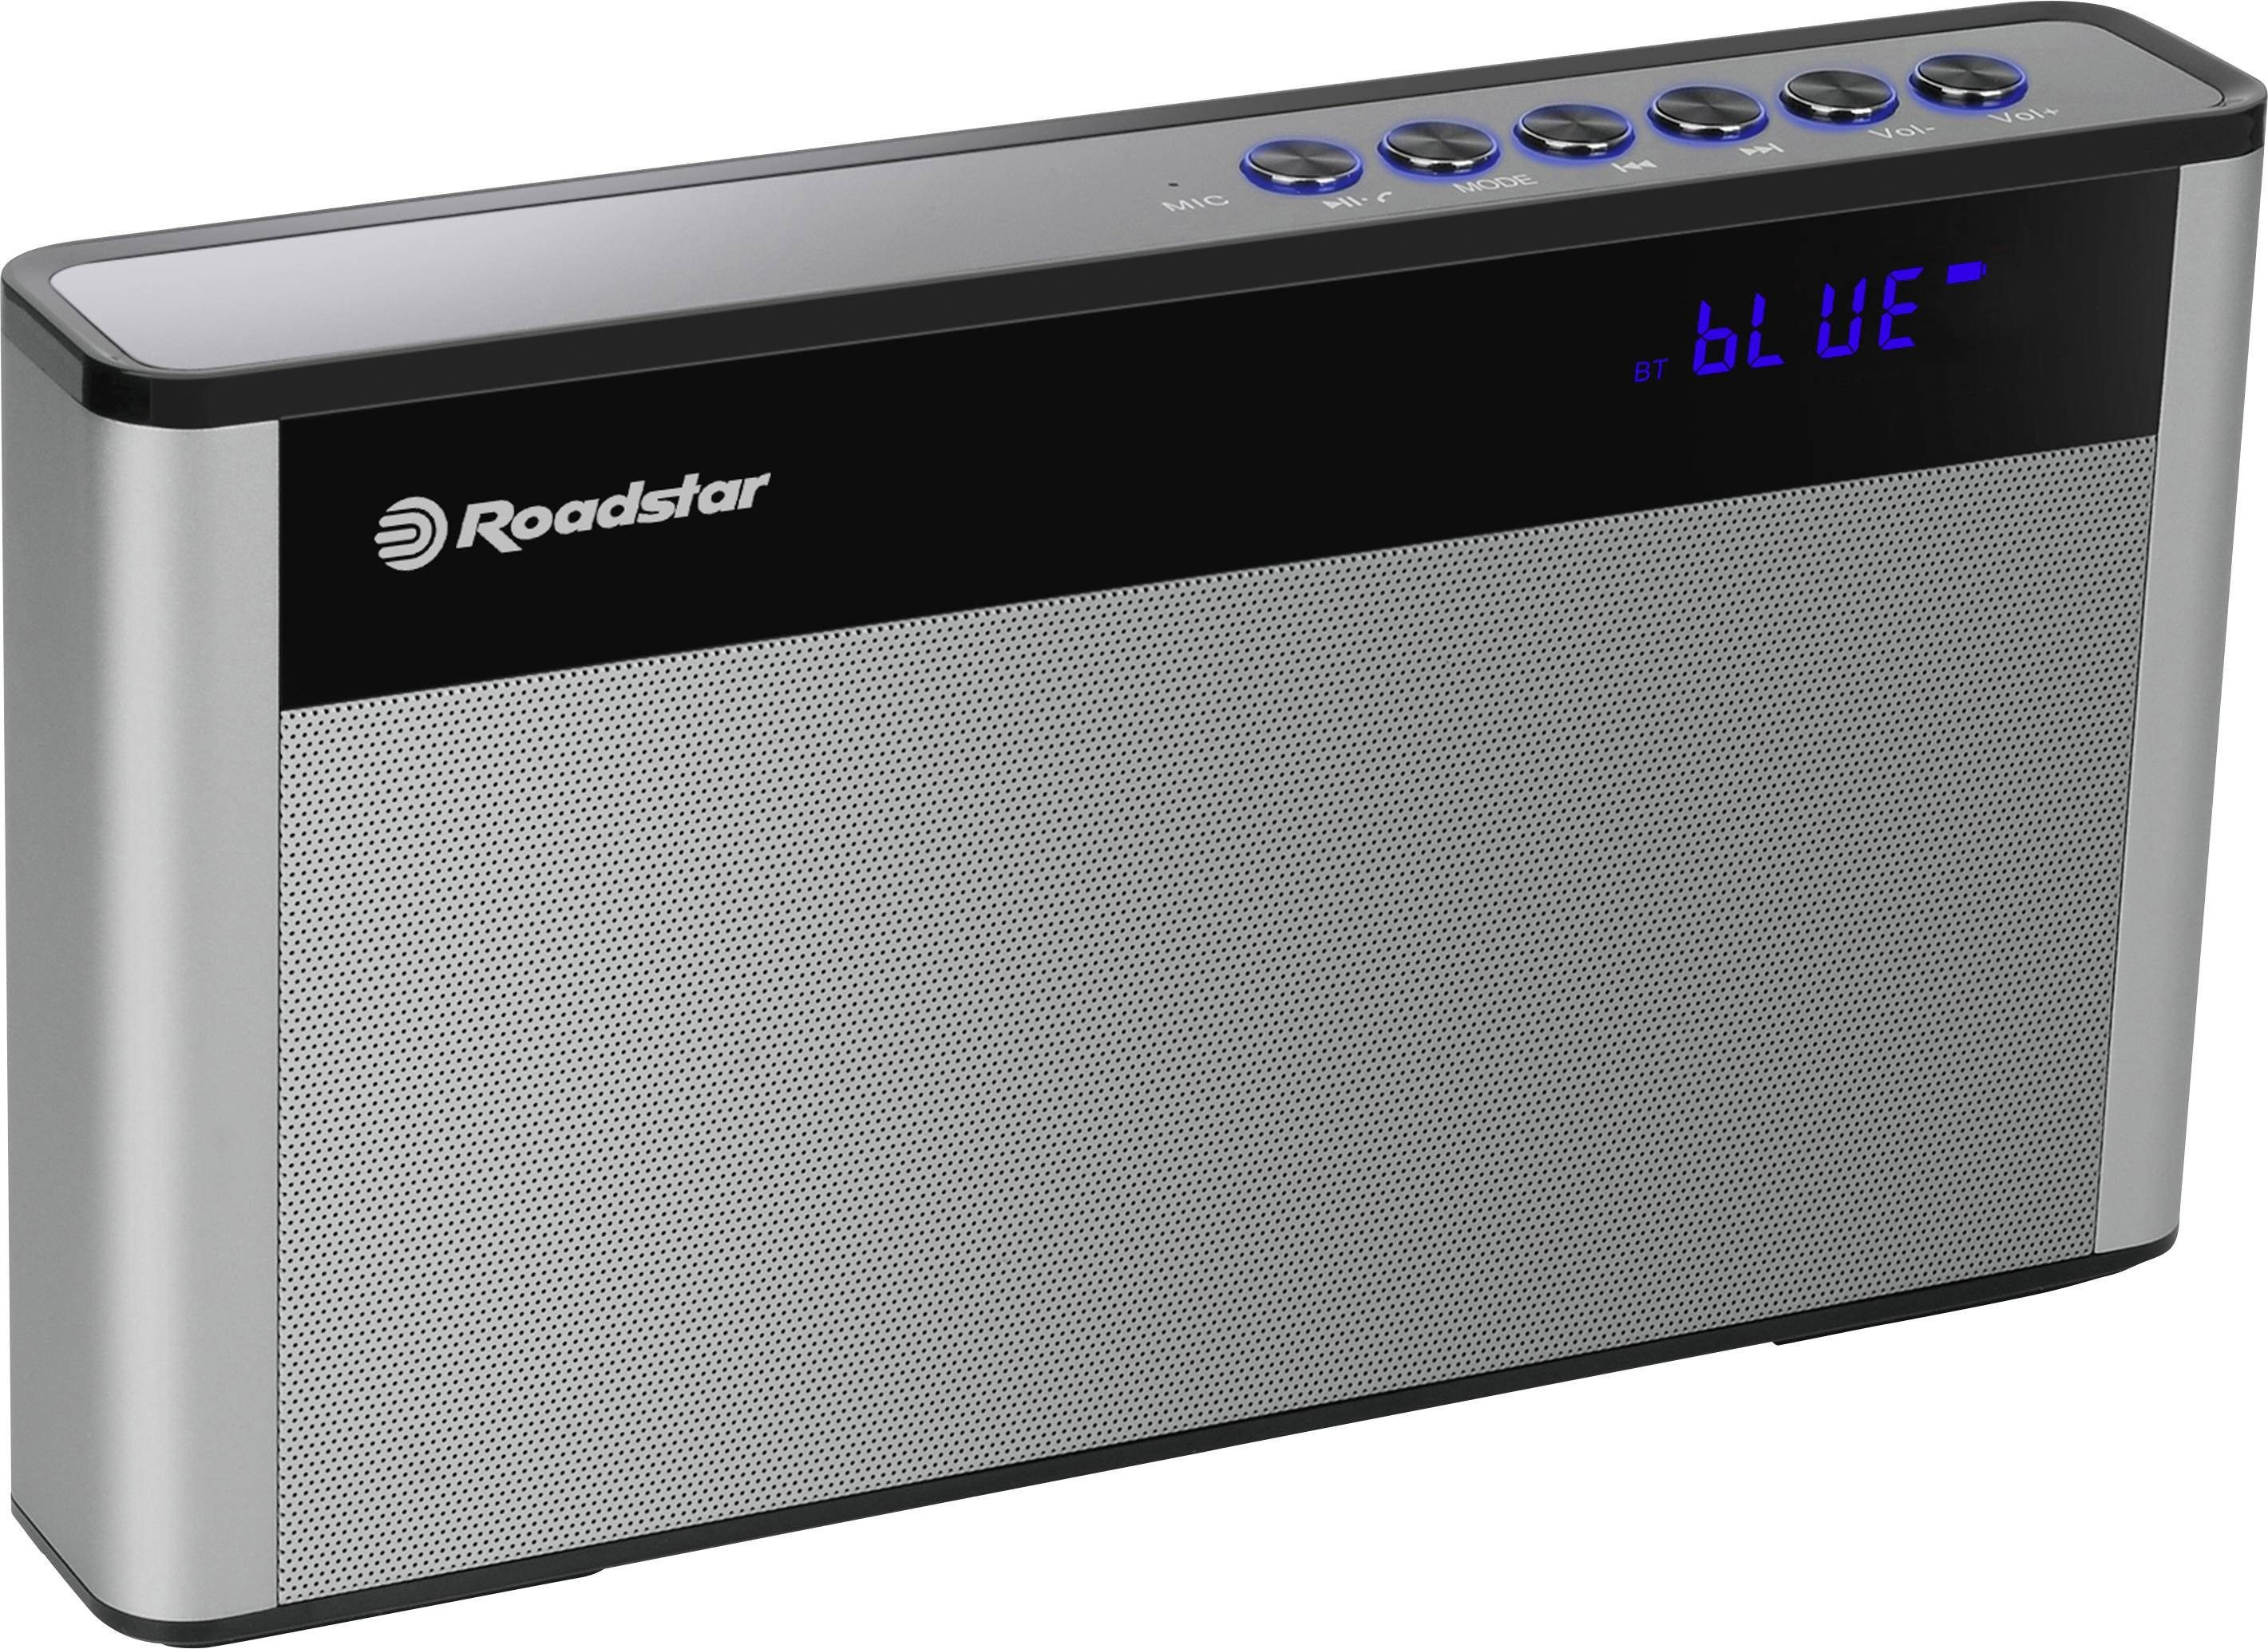 Roadstar »Roadstar TRA-570US tragbares FM Radio« Radio online kaufen | OTTO